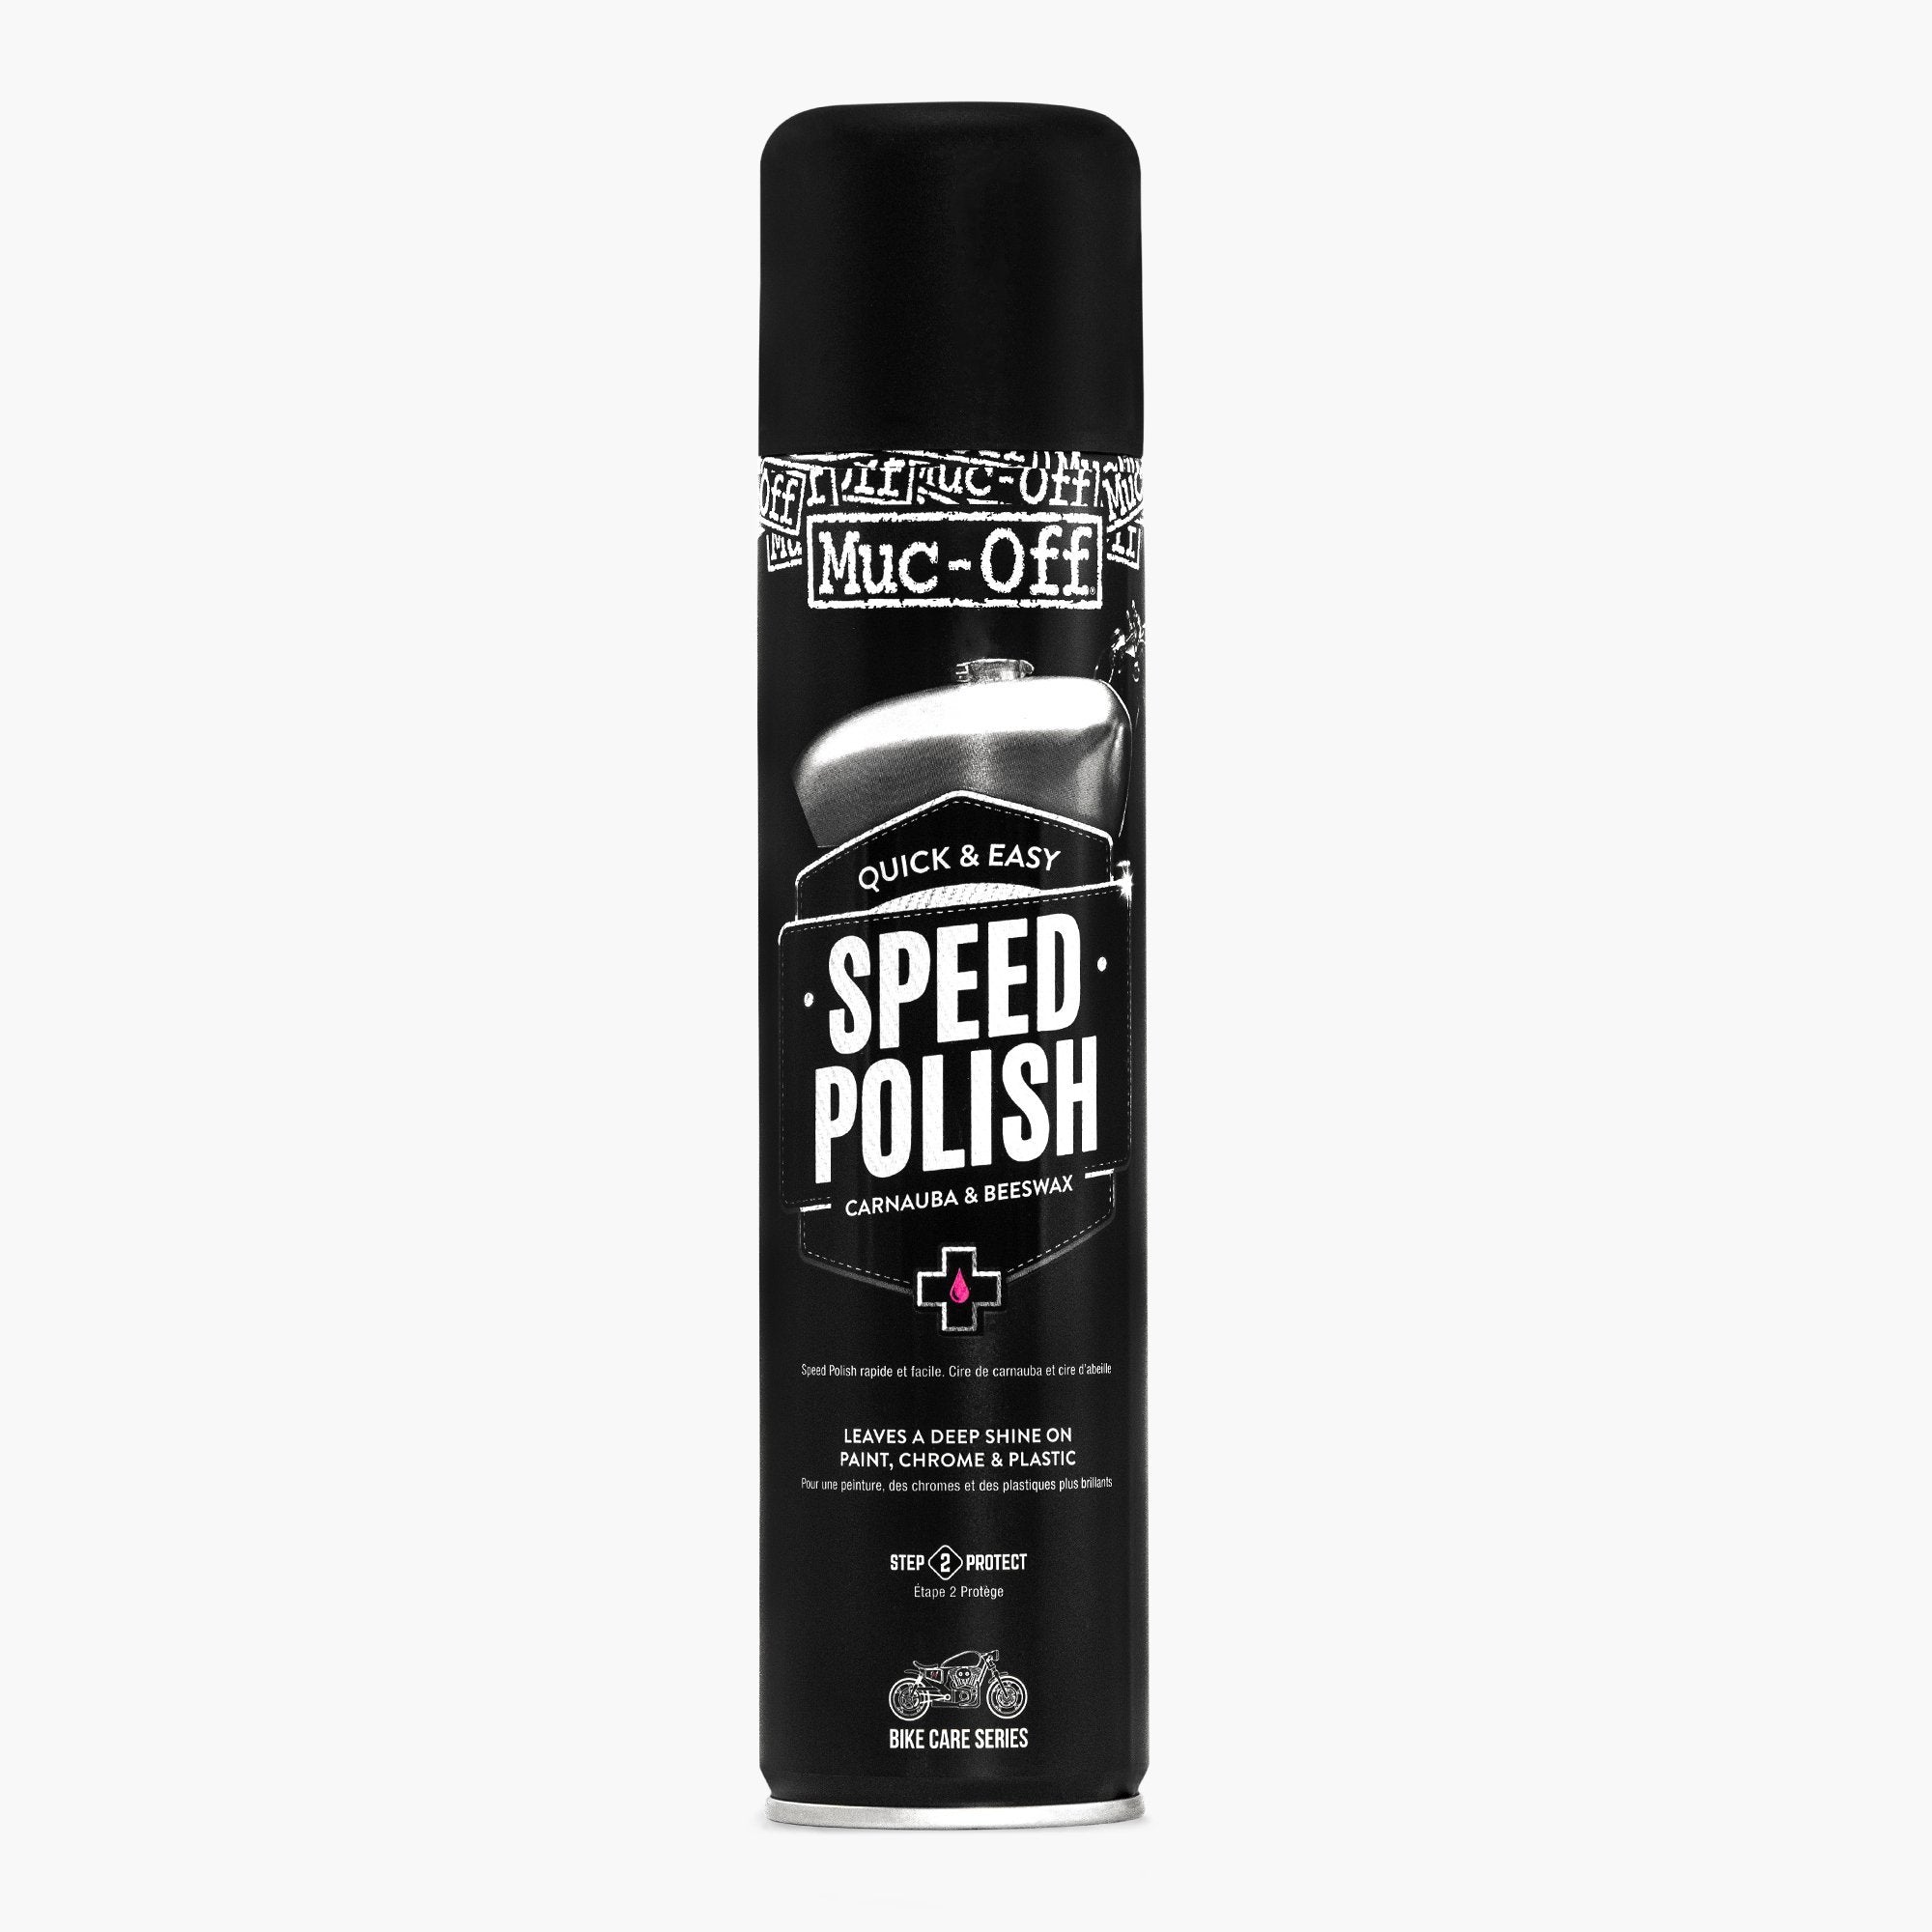 Speed Wax Spray